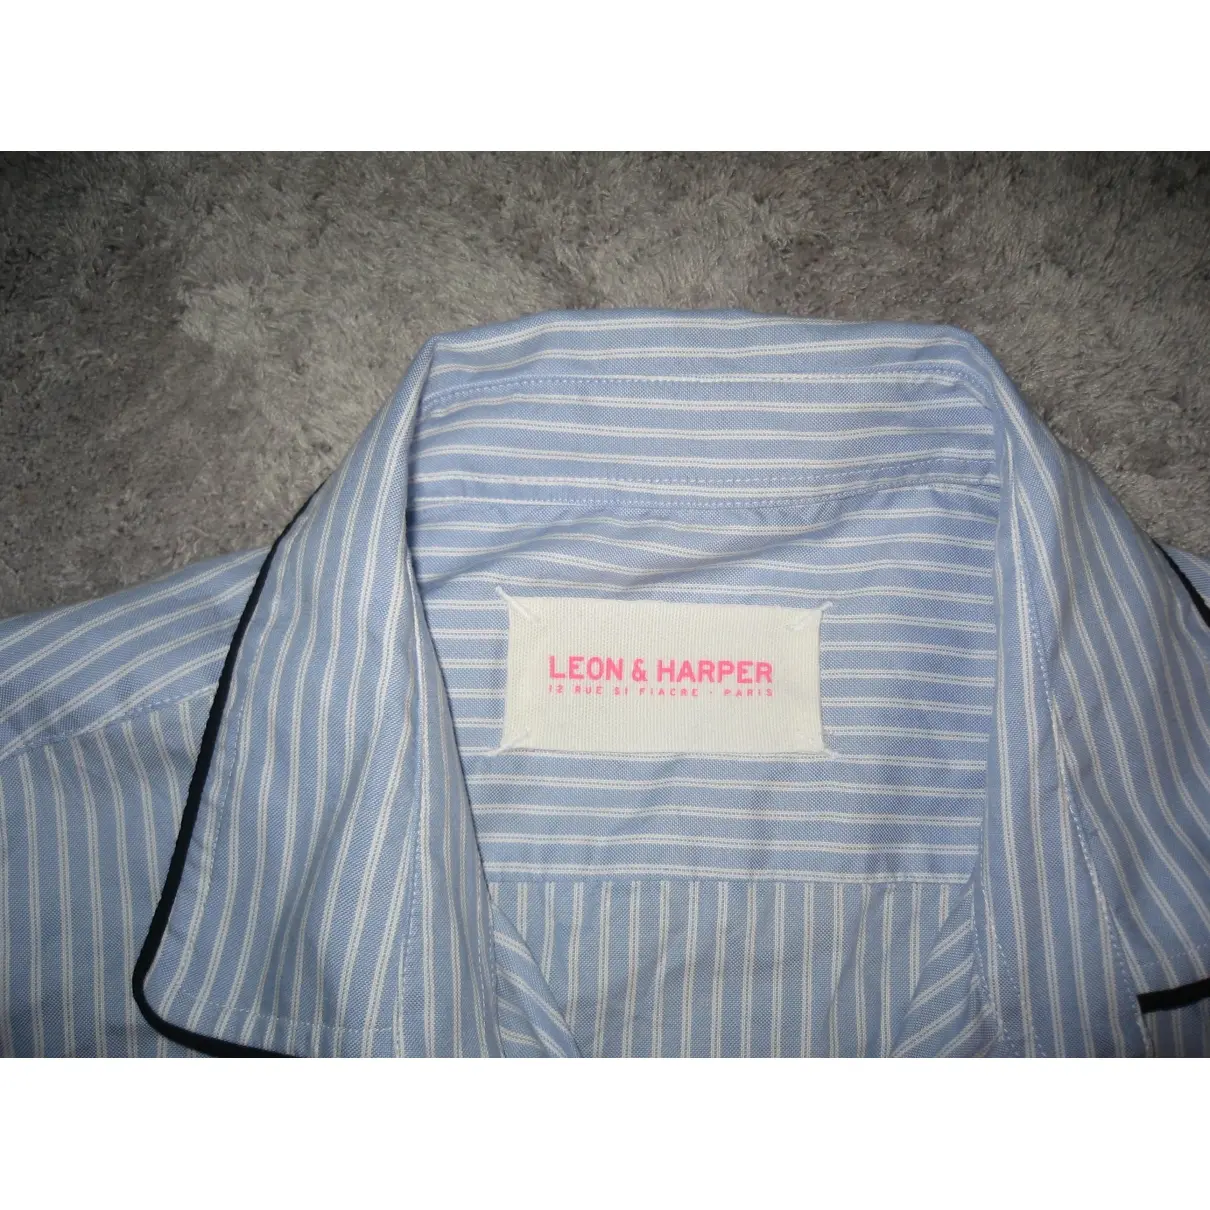 Buy Leon & Harper Shirt online